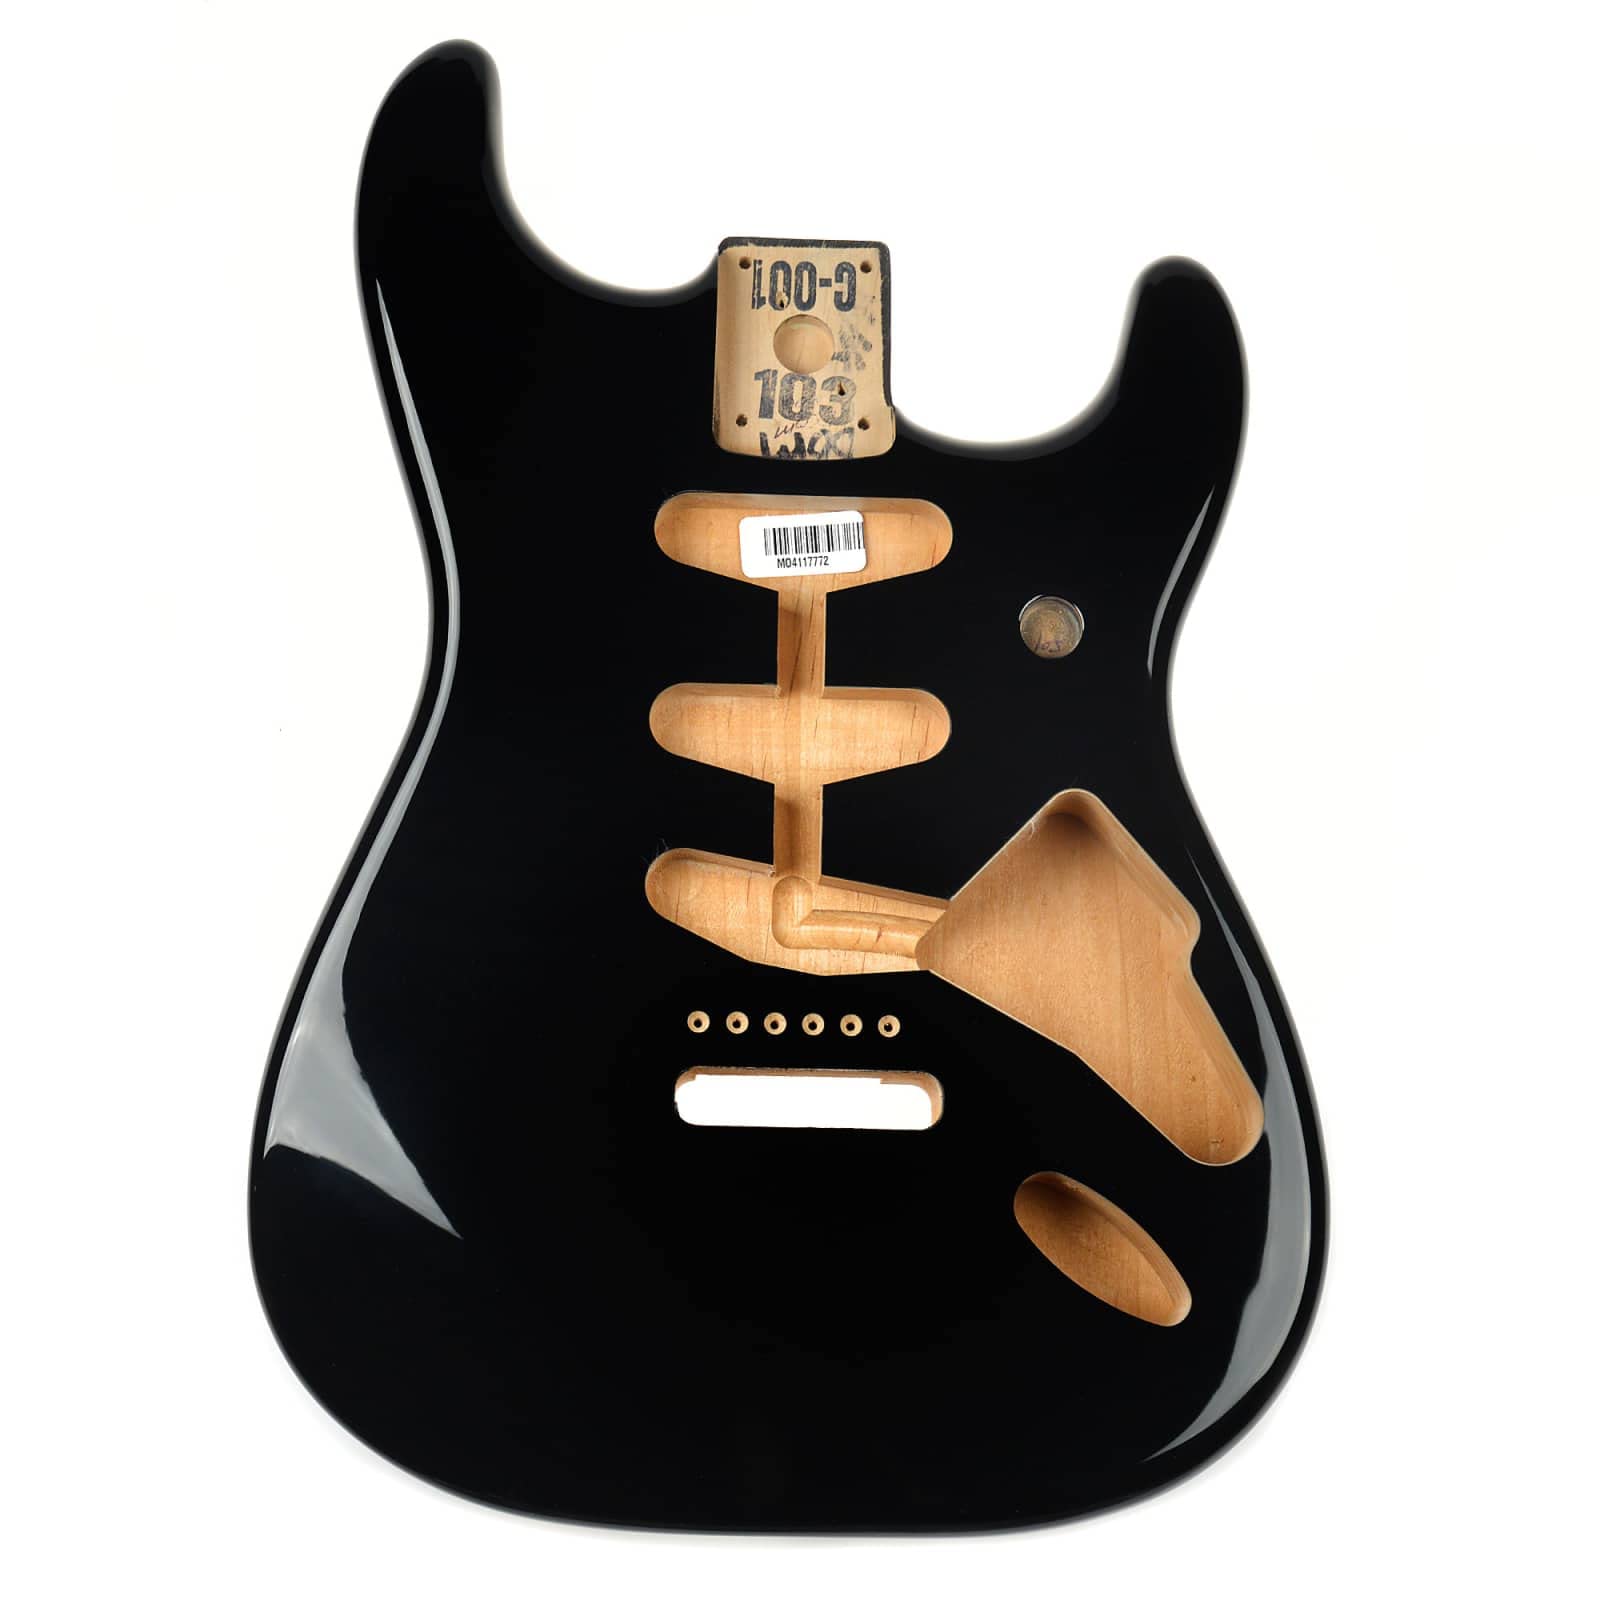 Fender एल्डर स्ट्रैटोकास्टर बॉडी - विंटेज ब्रिज रूटिंग - 3-रंग सनबर्स्ट